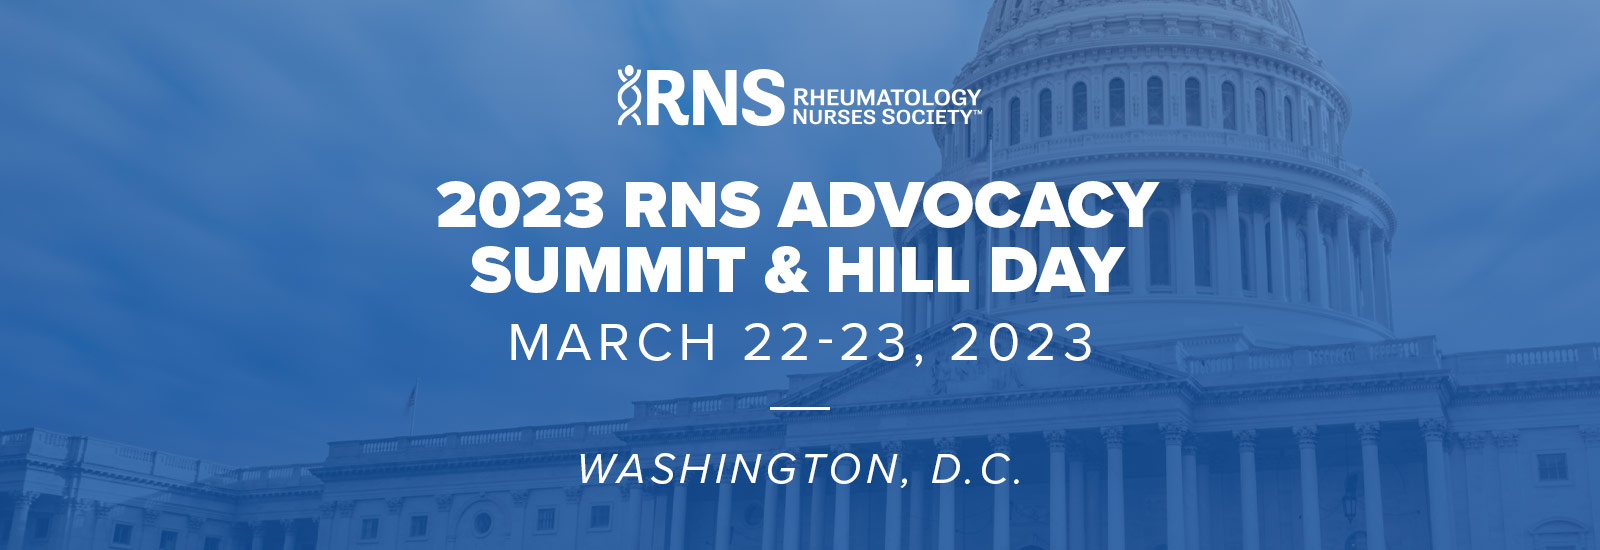 2023 RNS Advocacy Summit - March 22-23